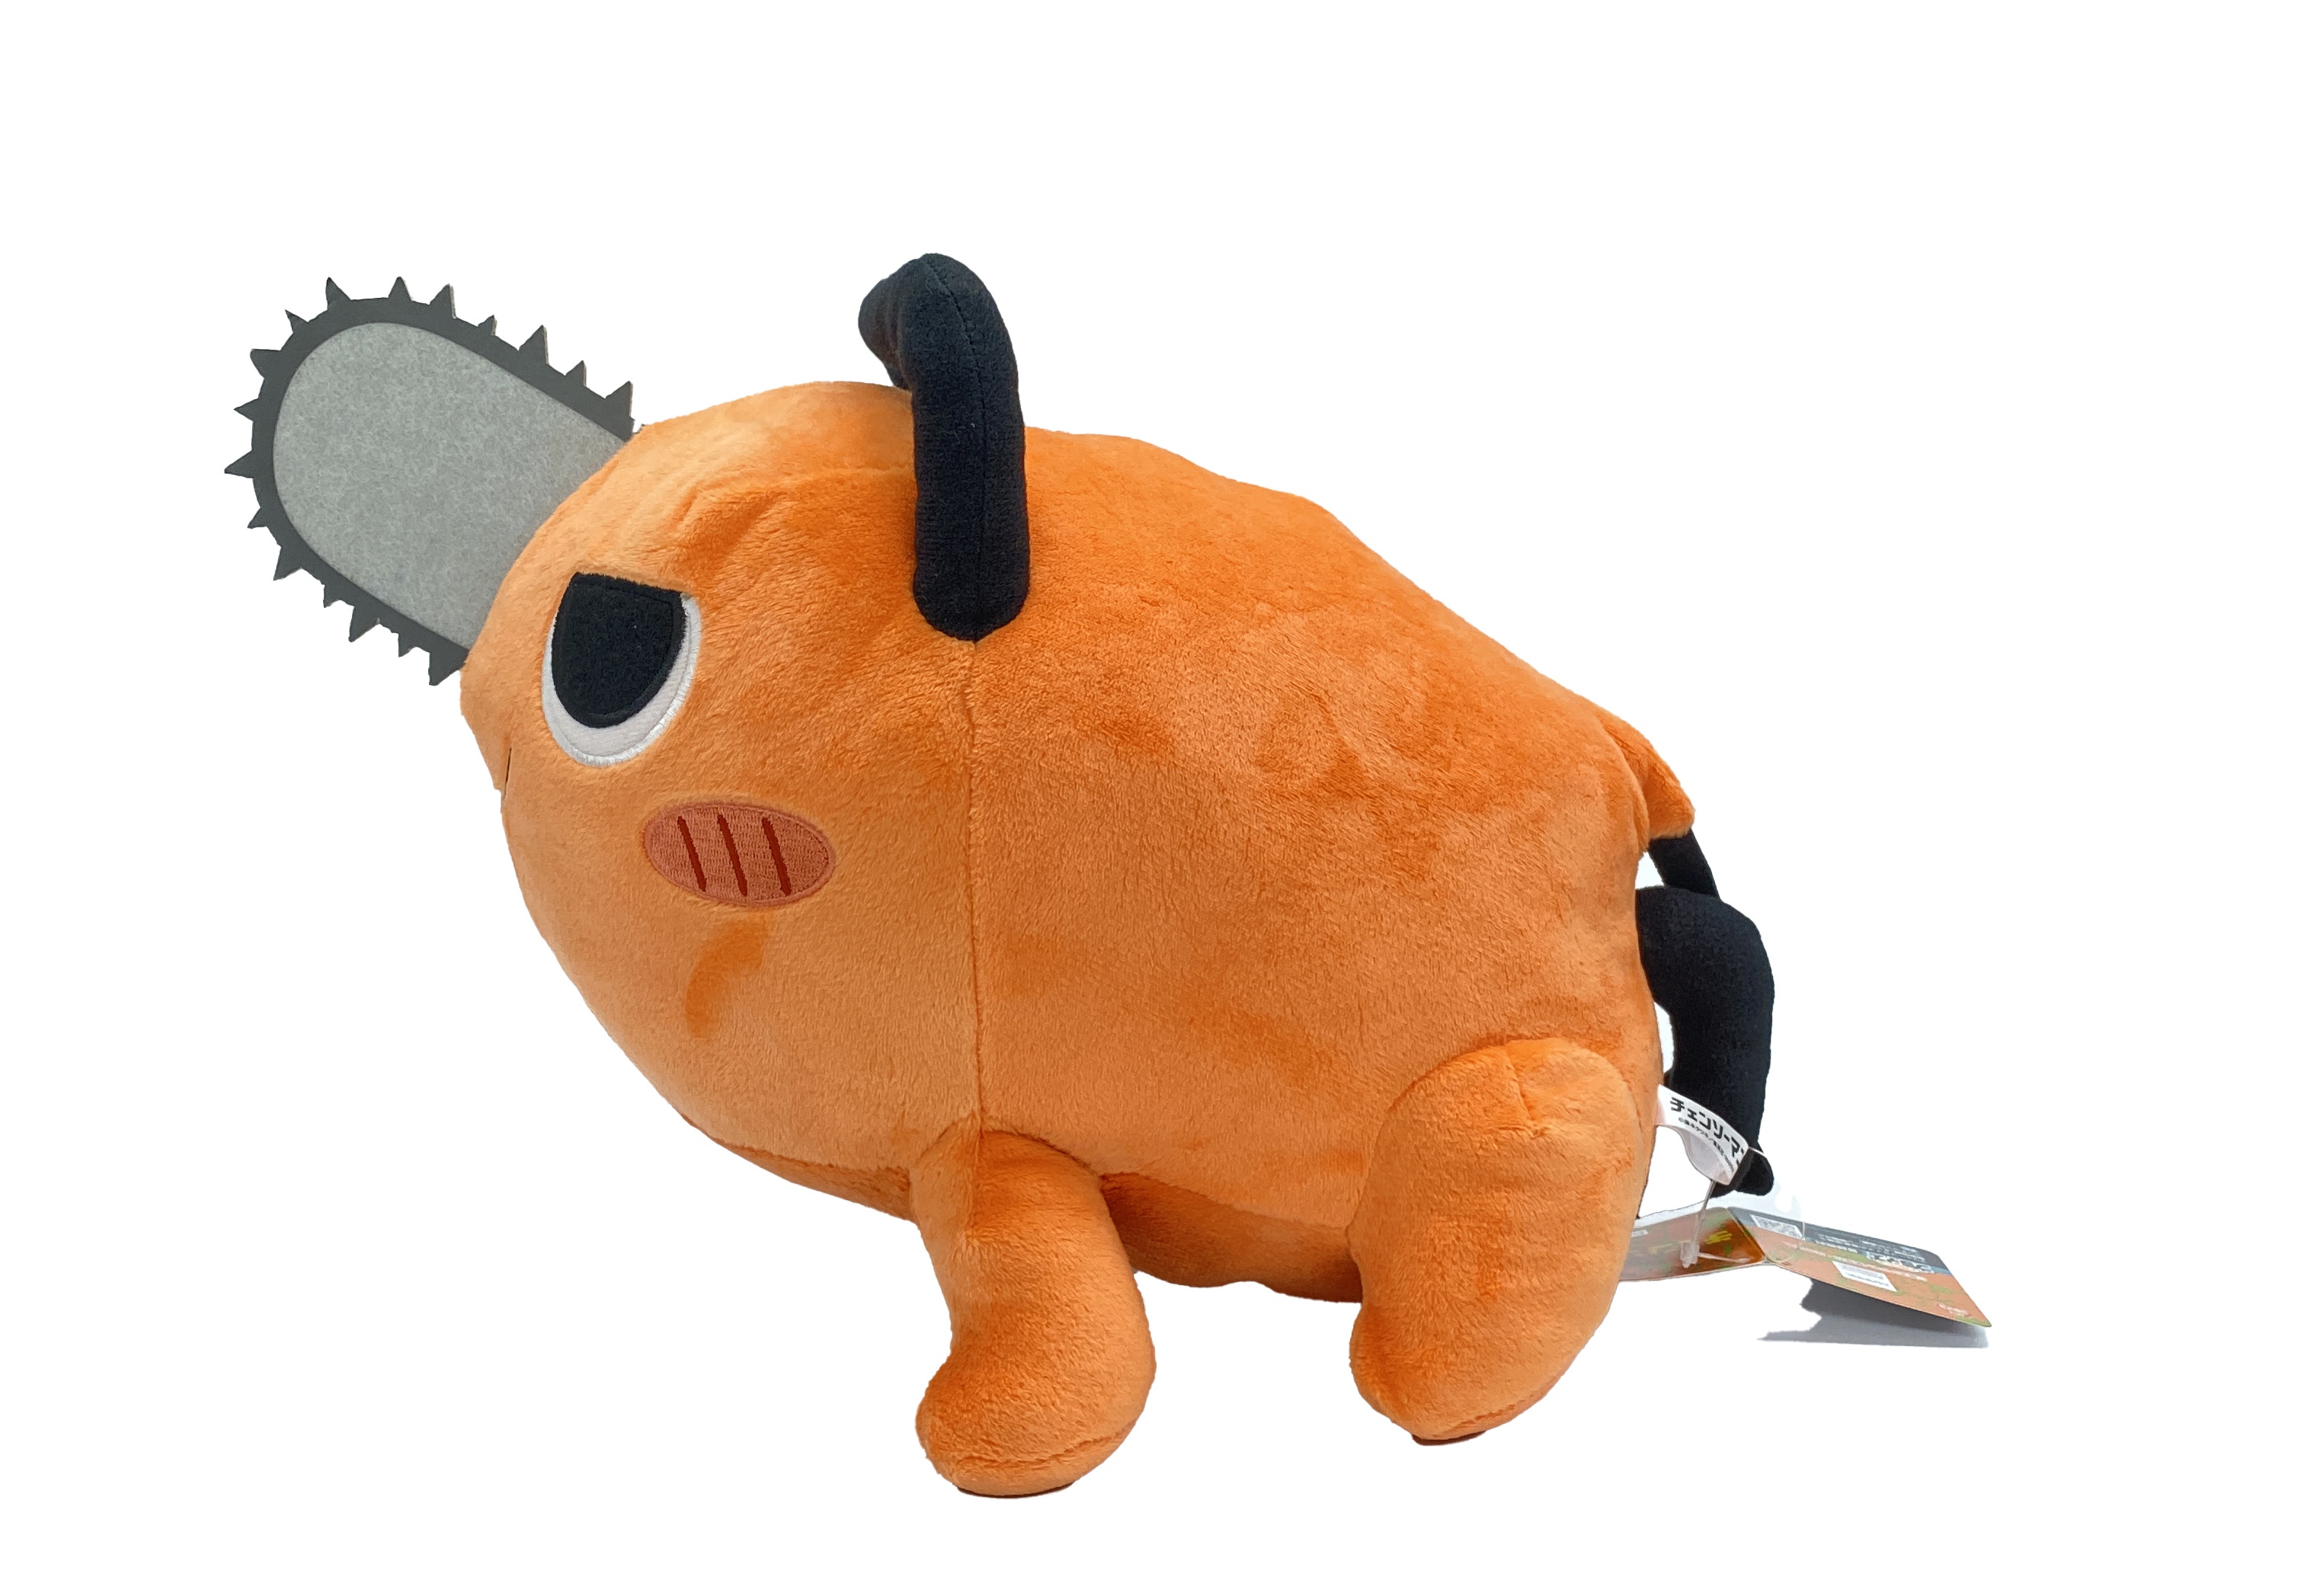 Chainsaw Man Pochita BIG Plush Doll October 2022 Prize Shueisha from Japan  F/S